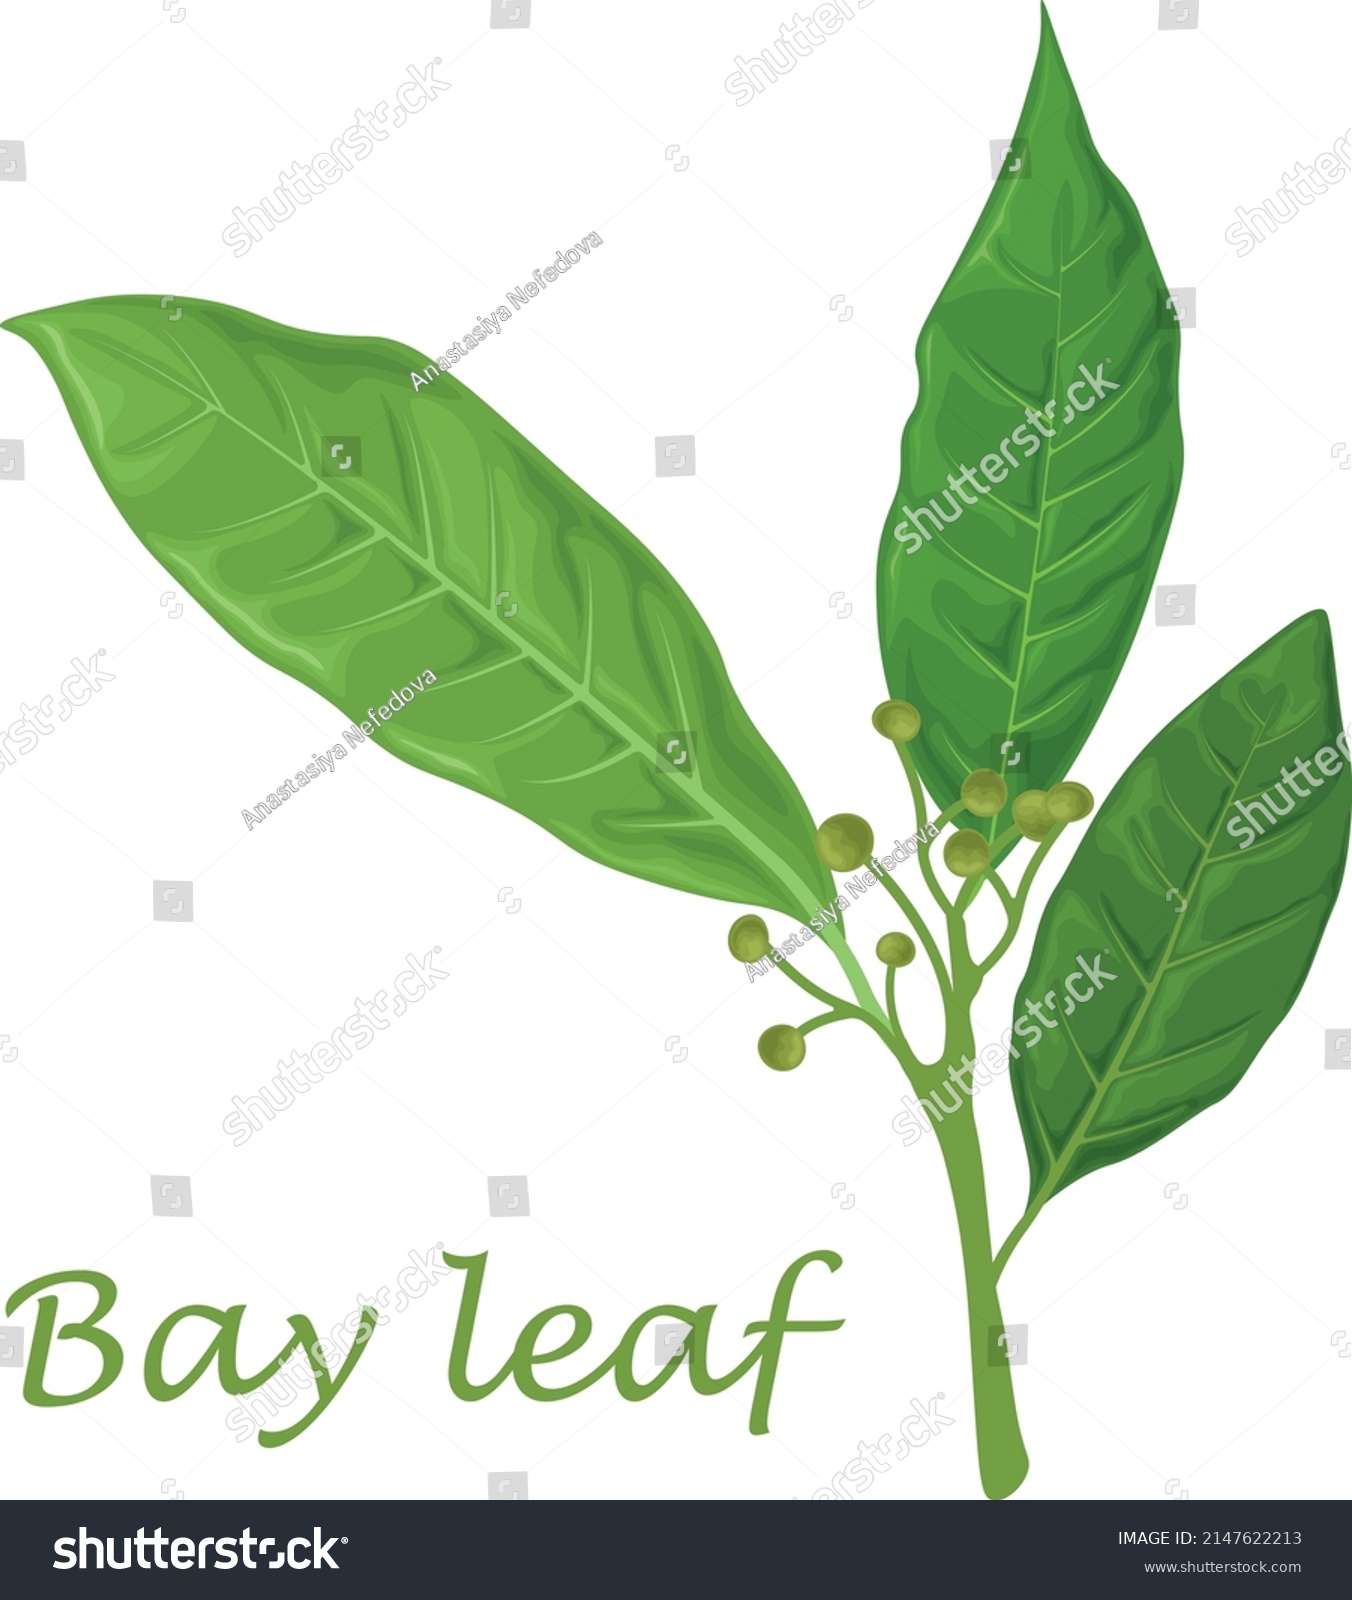 SVG of Bay leaf. Green laurel leaves. A fragrant medicinal plant for seasoning. Vector illustration isolated on a white background svg